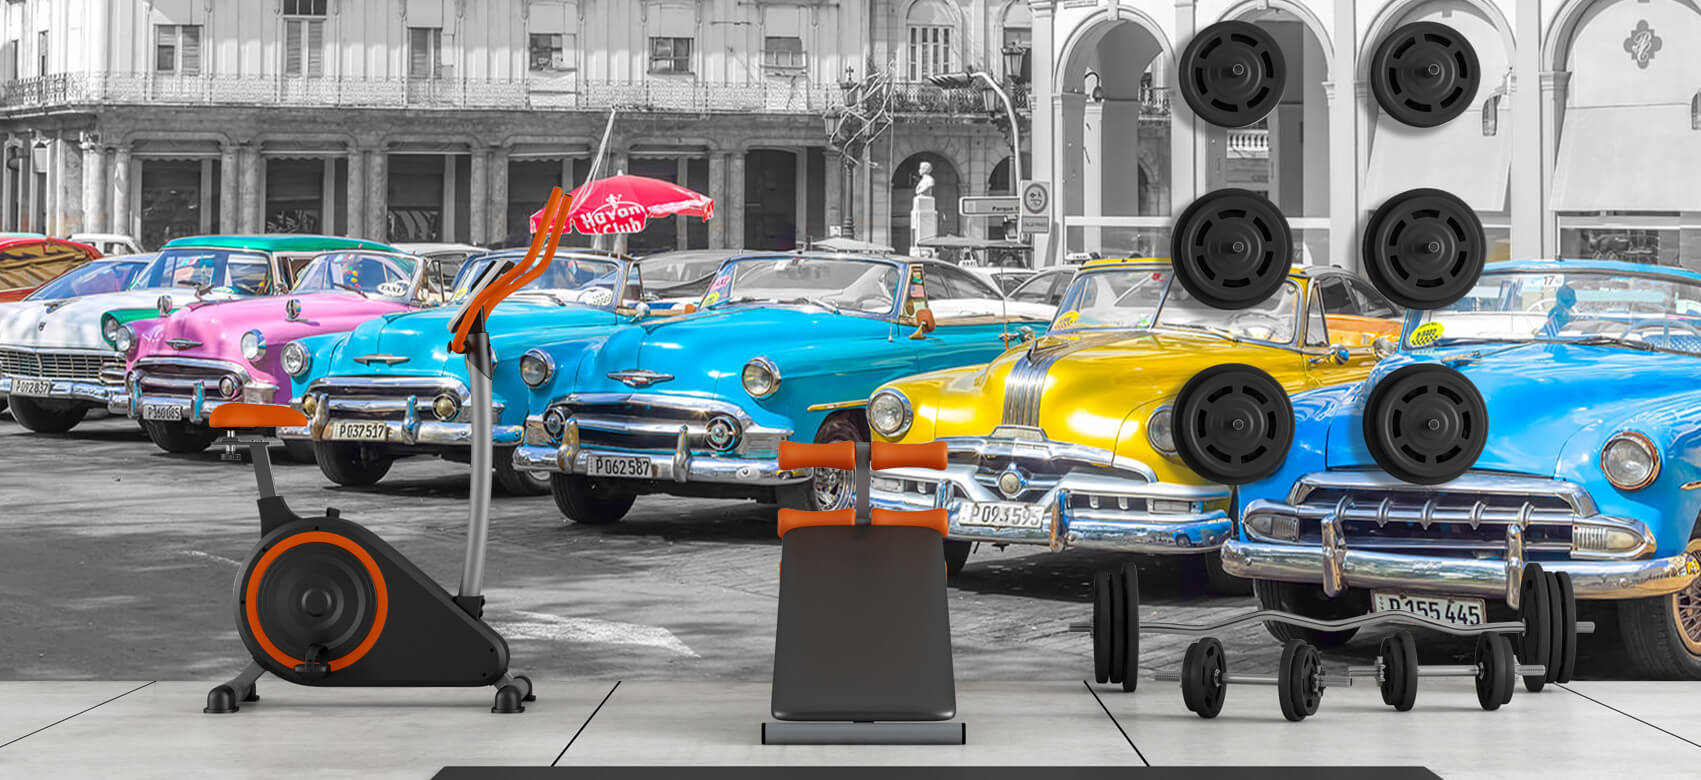  Traditionelle kubanische Autos 2